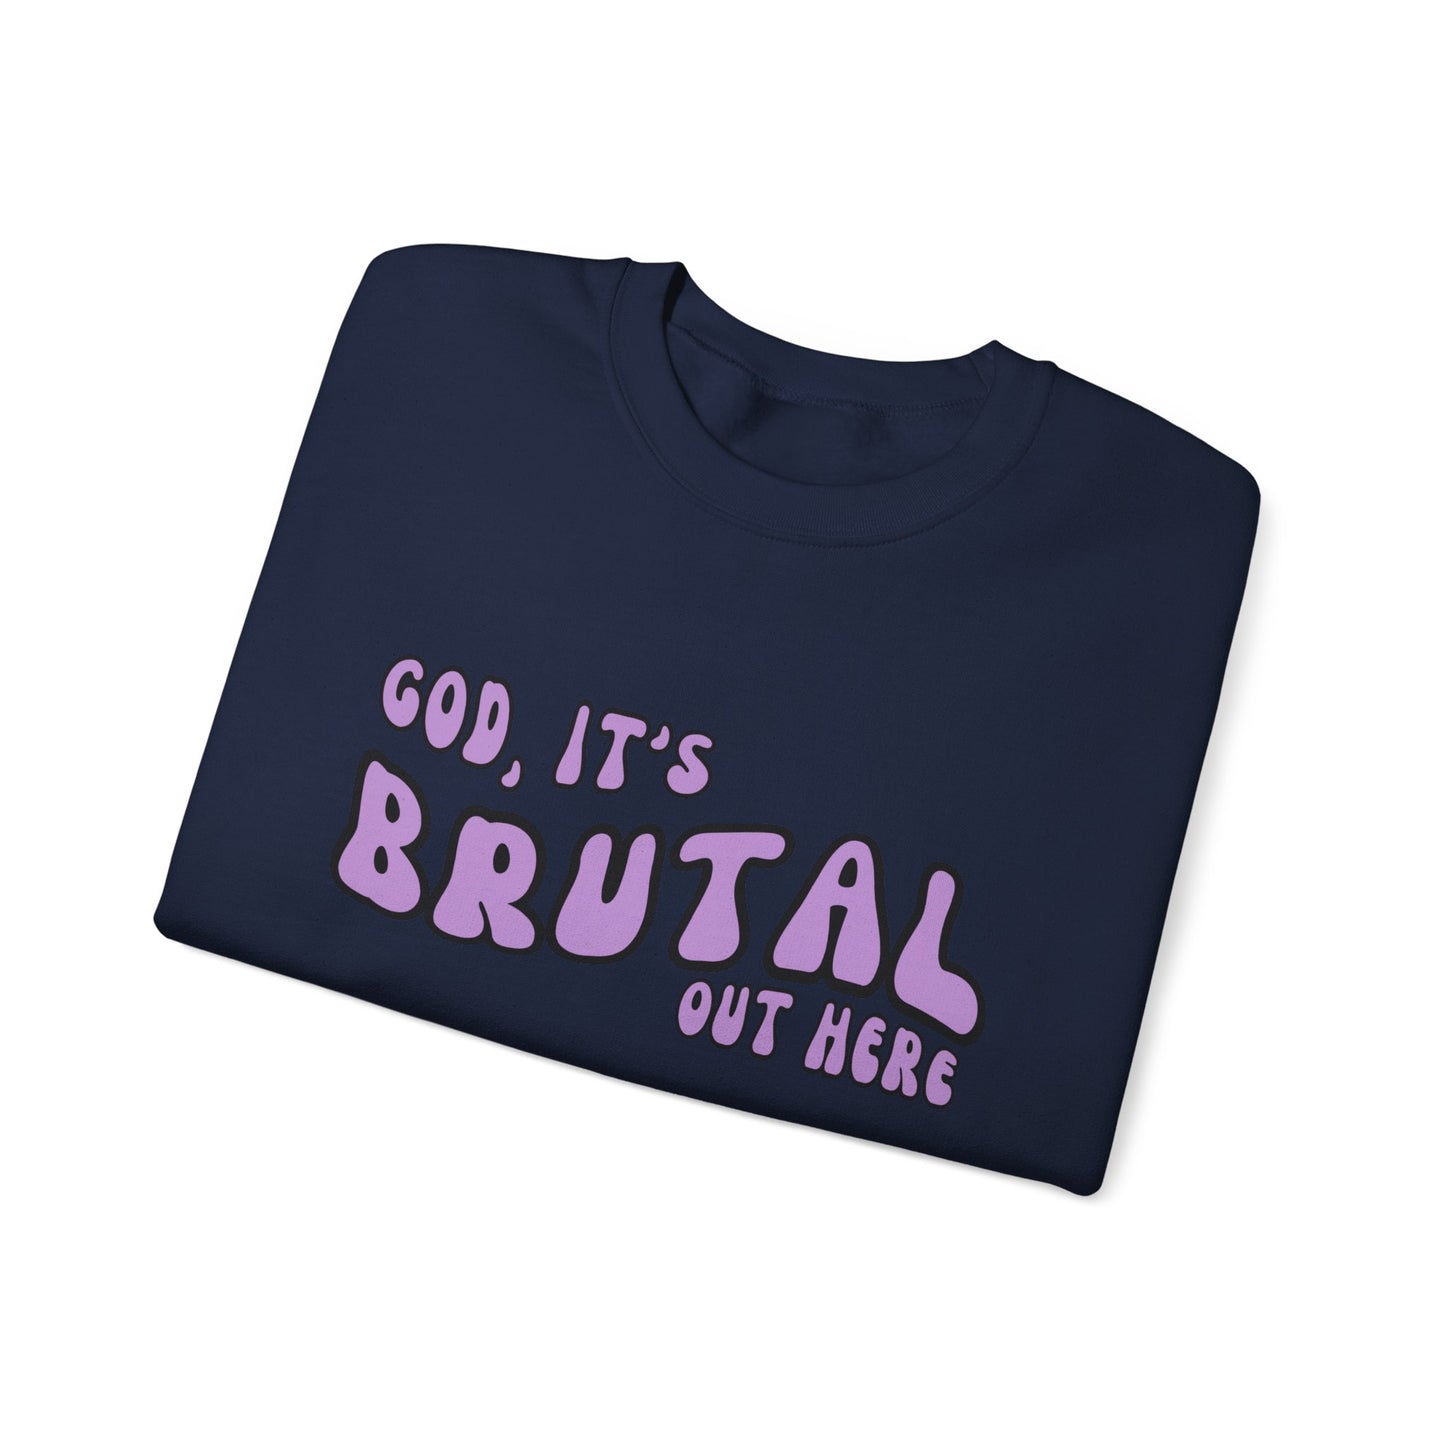 God Its Brutal Out Here Sweatshirt, Olivia Rodrigo Merch, Olivia Rodrigo Sweatshirt, Olivia Rodrigo Guts, Guts Album